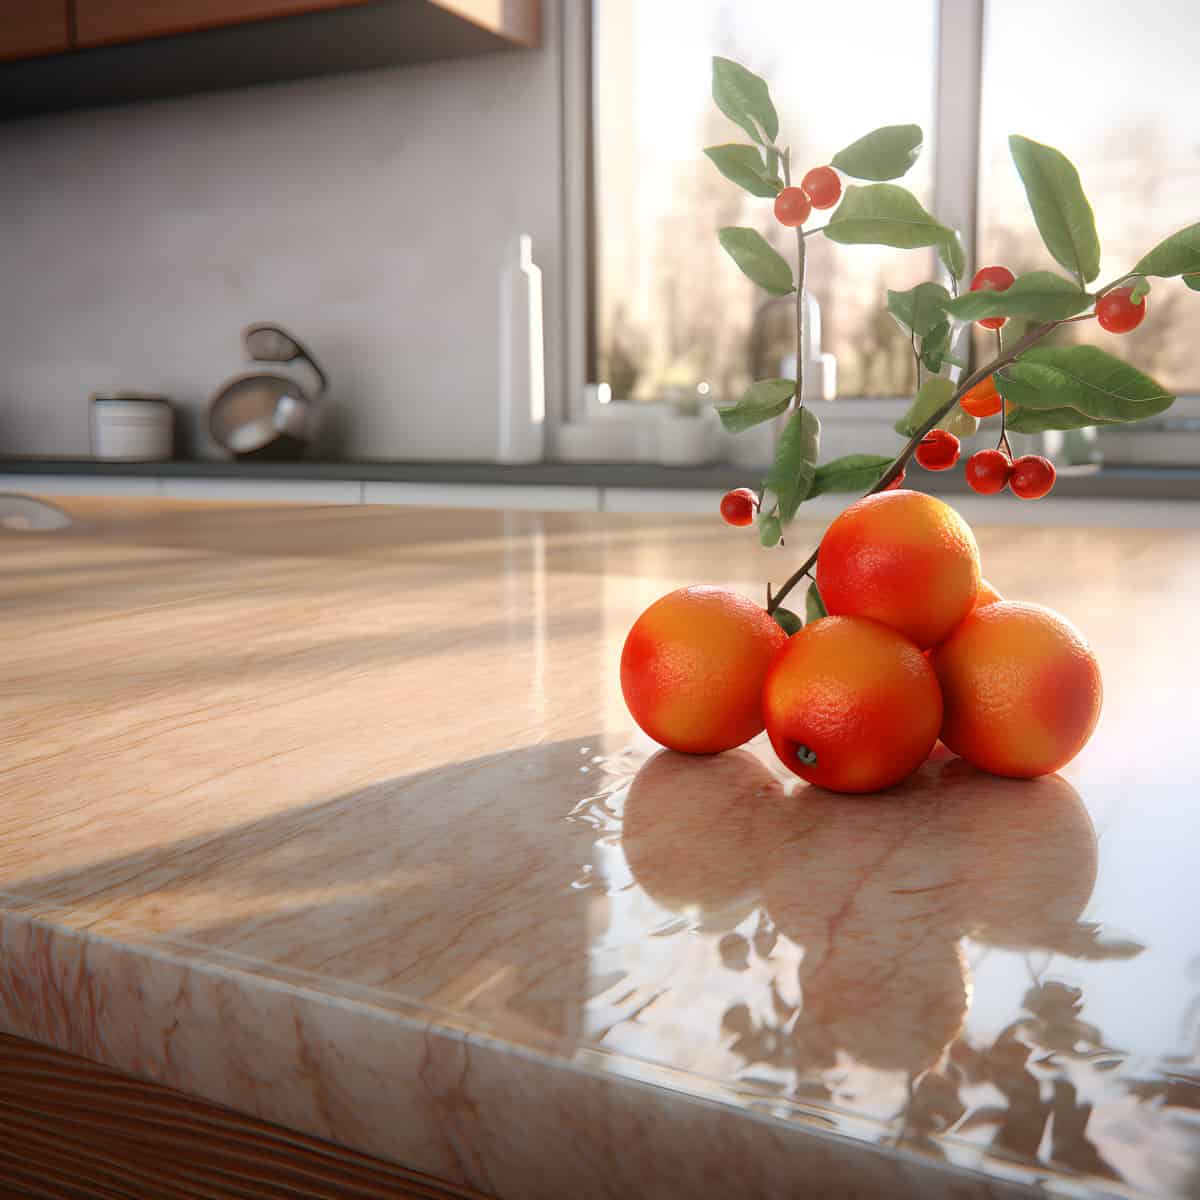 African Cherry Orange on a kitchen counter